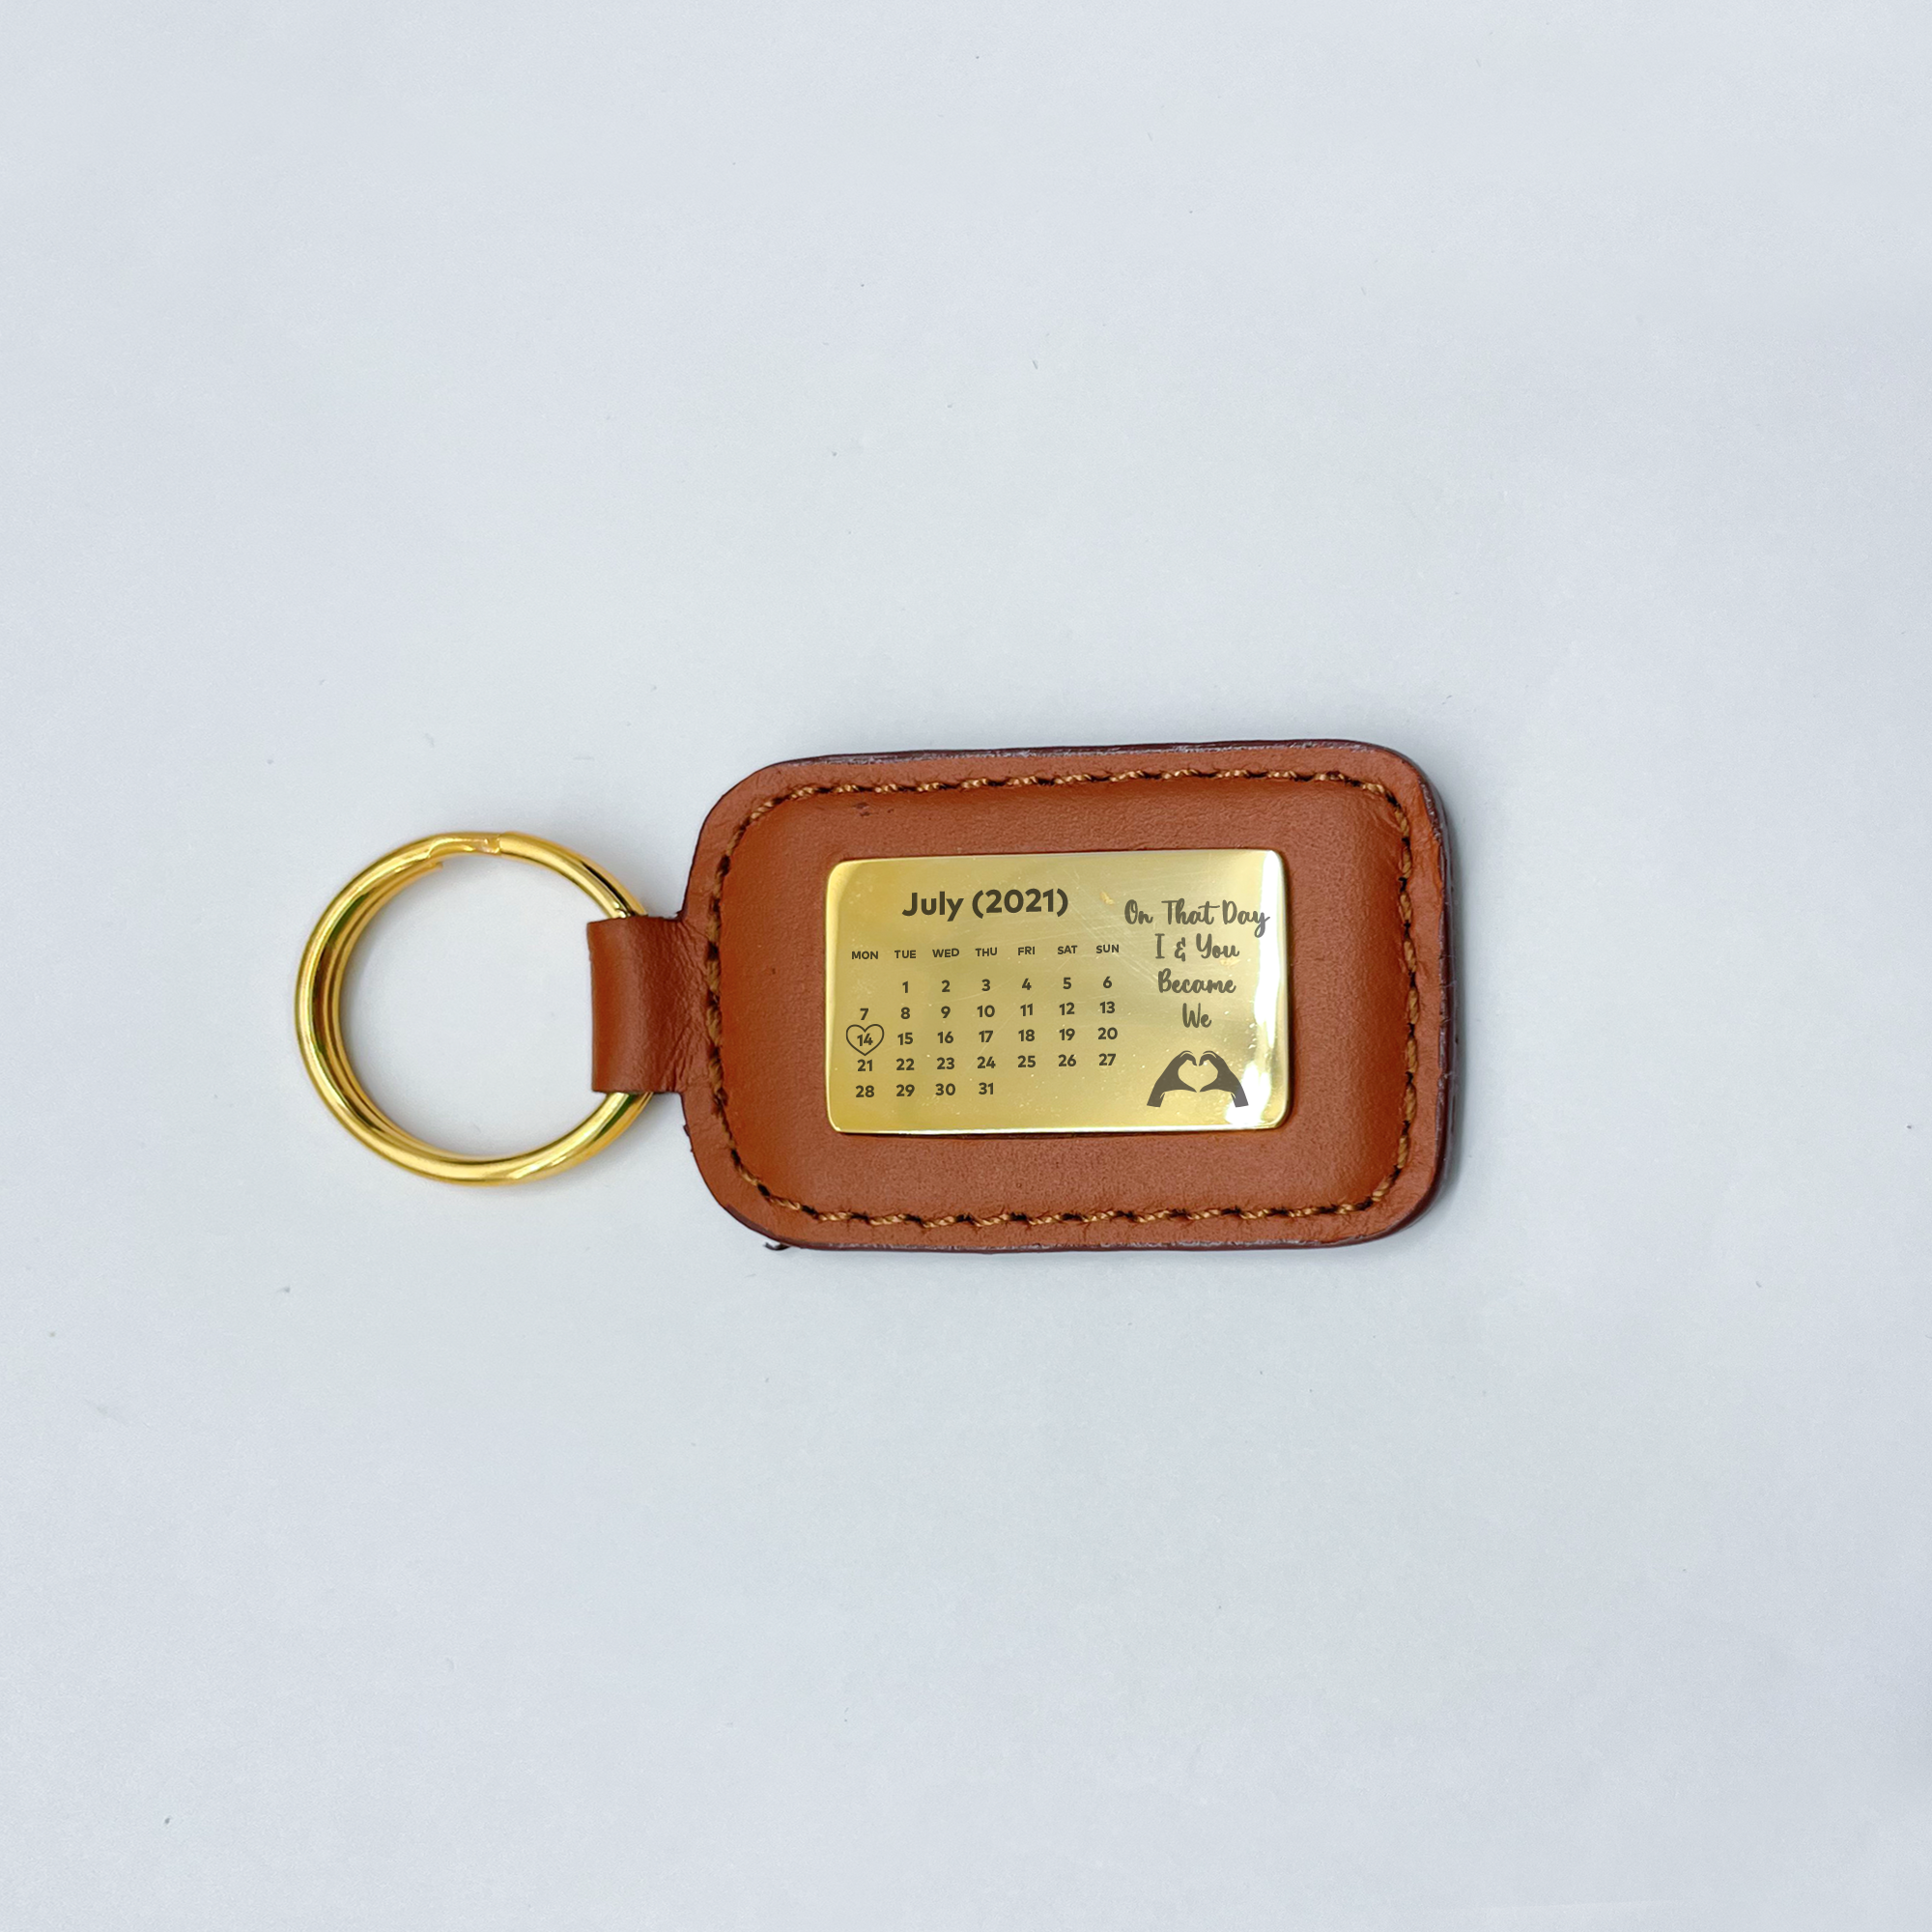 P U Leather Keychain BR 401